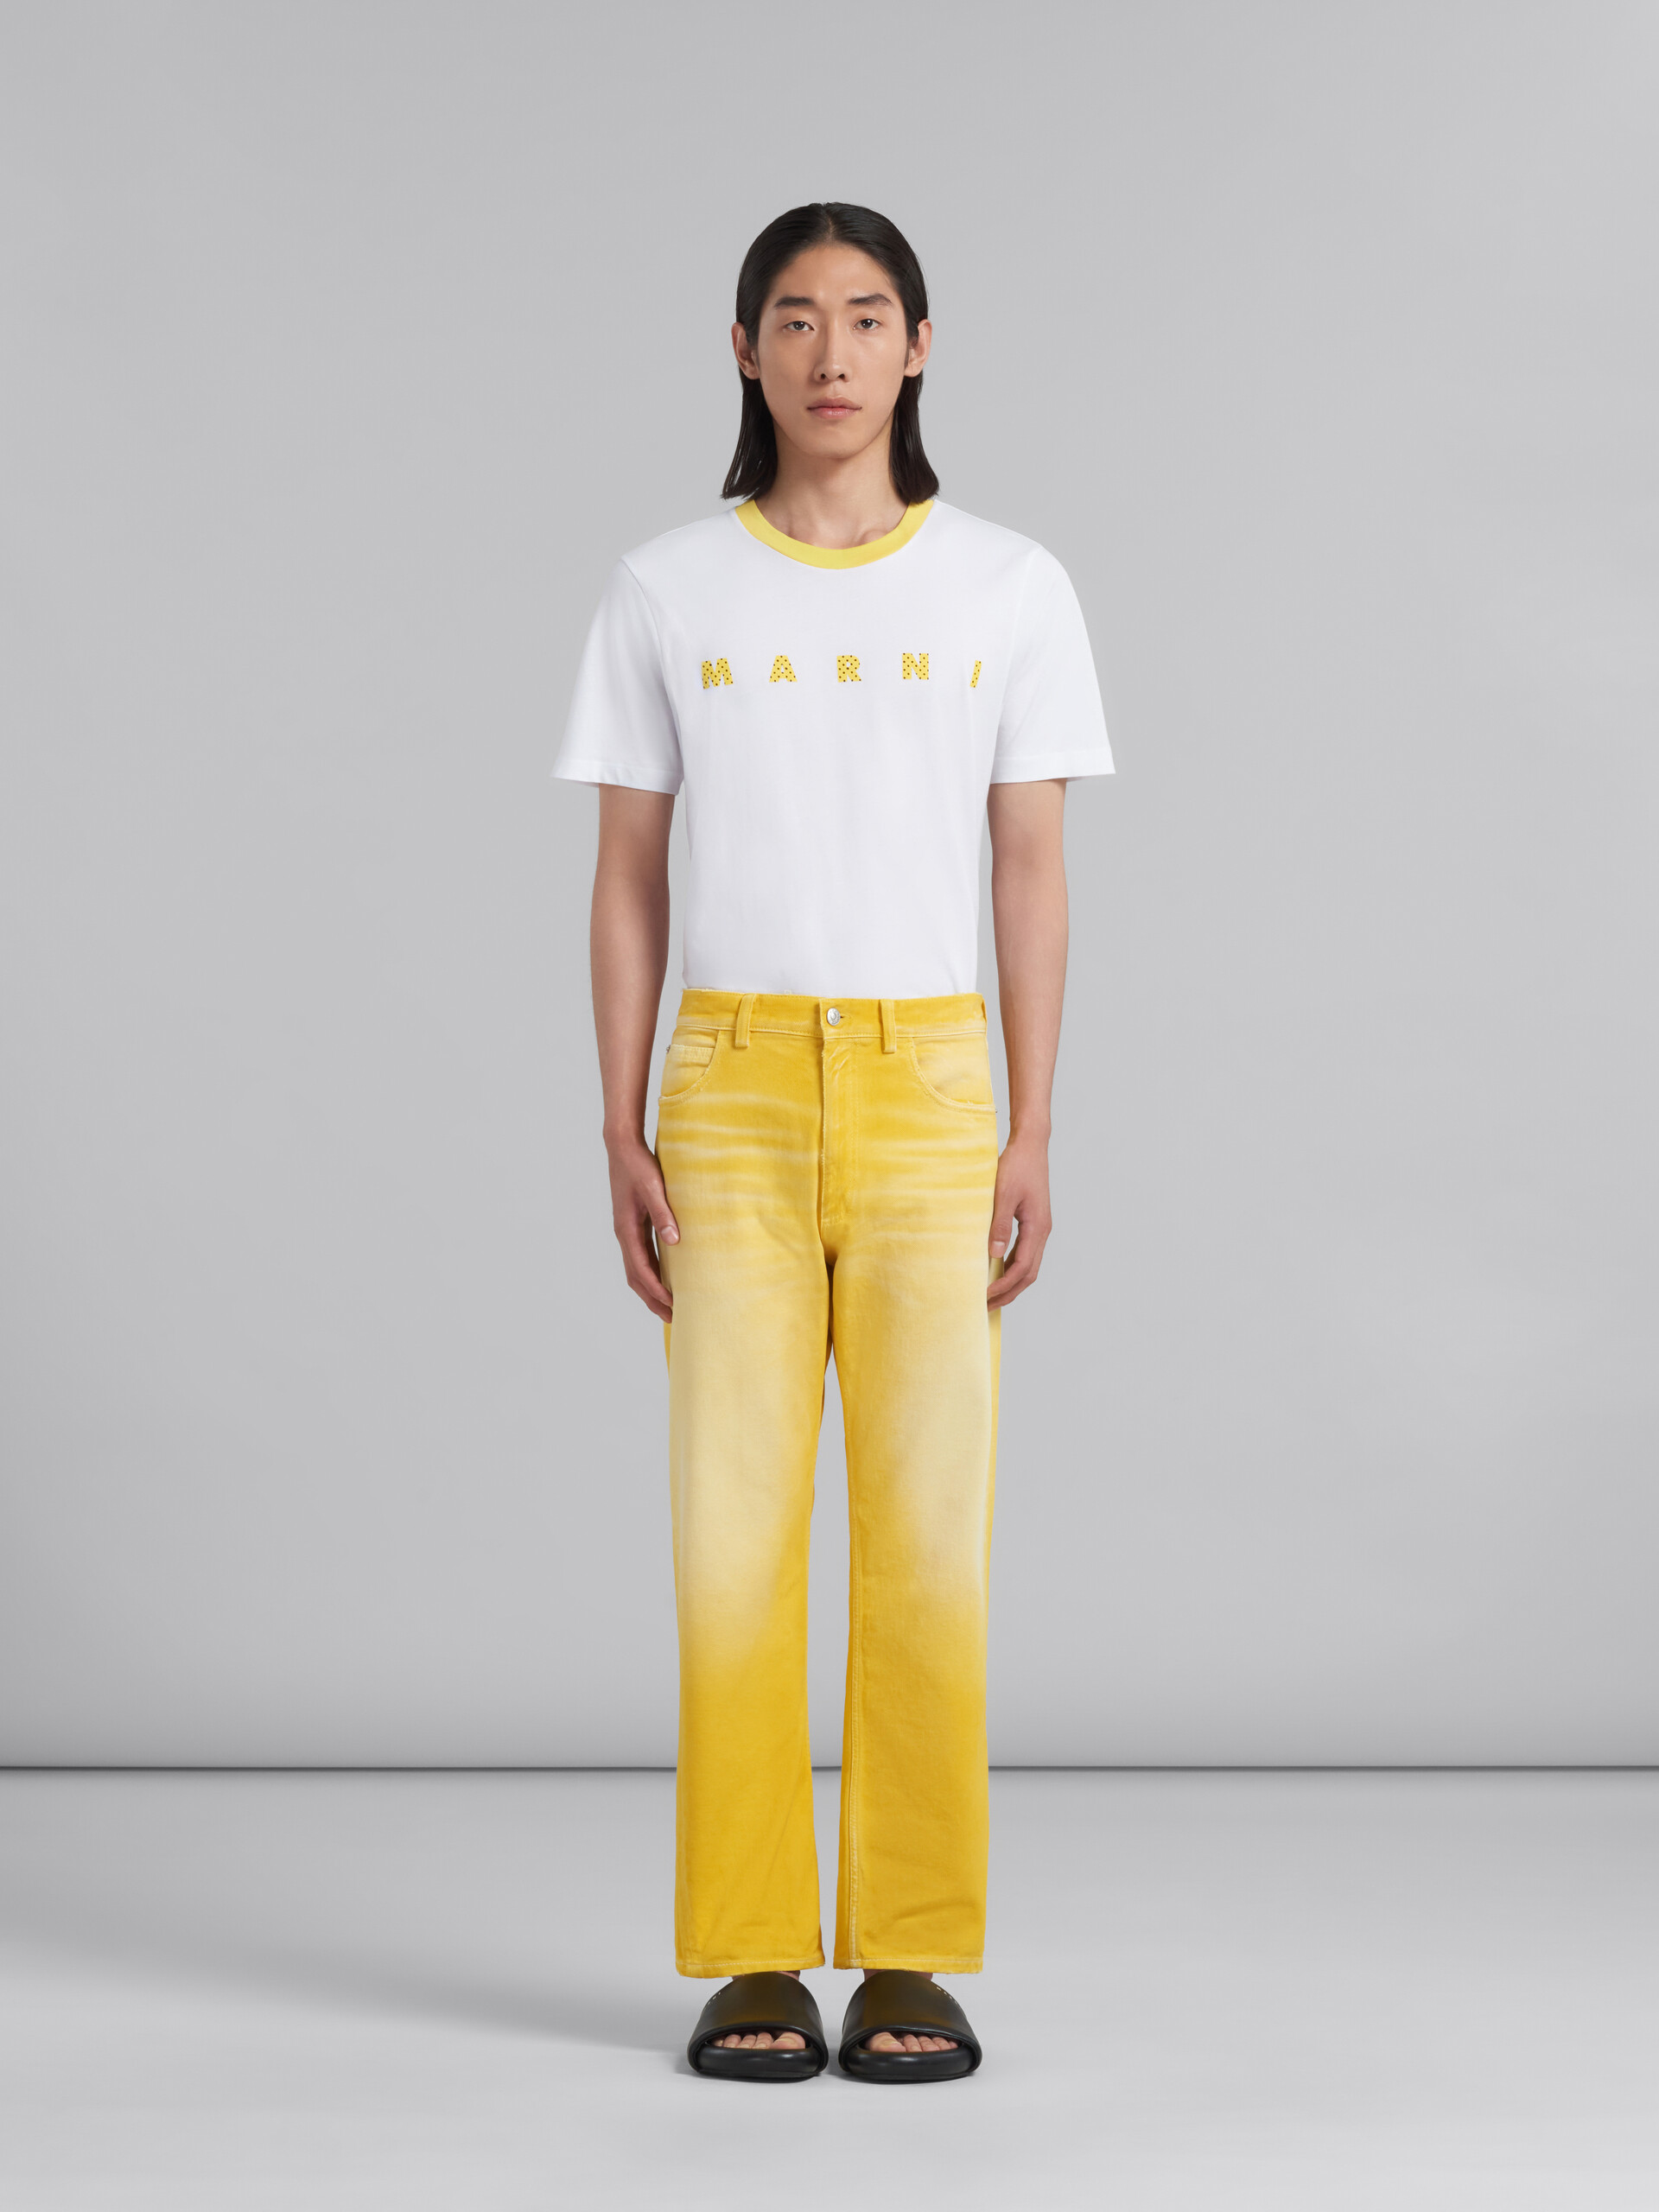 Pantalón de pernera recta amarillo de bull denim sobreteñido - Pantalones - Image 2